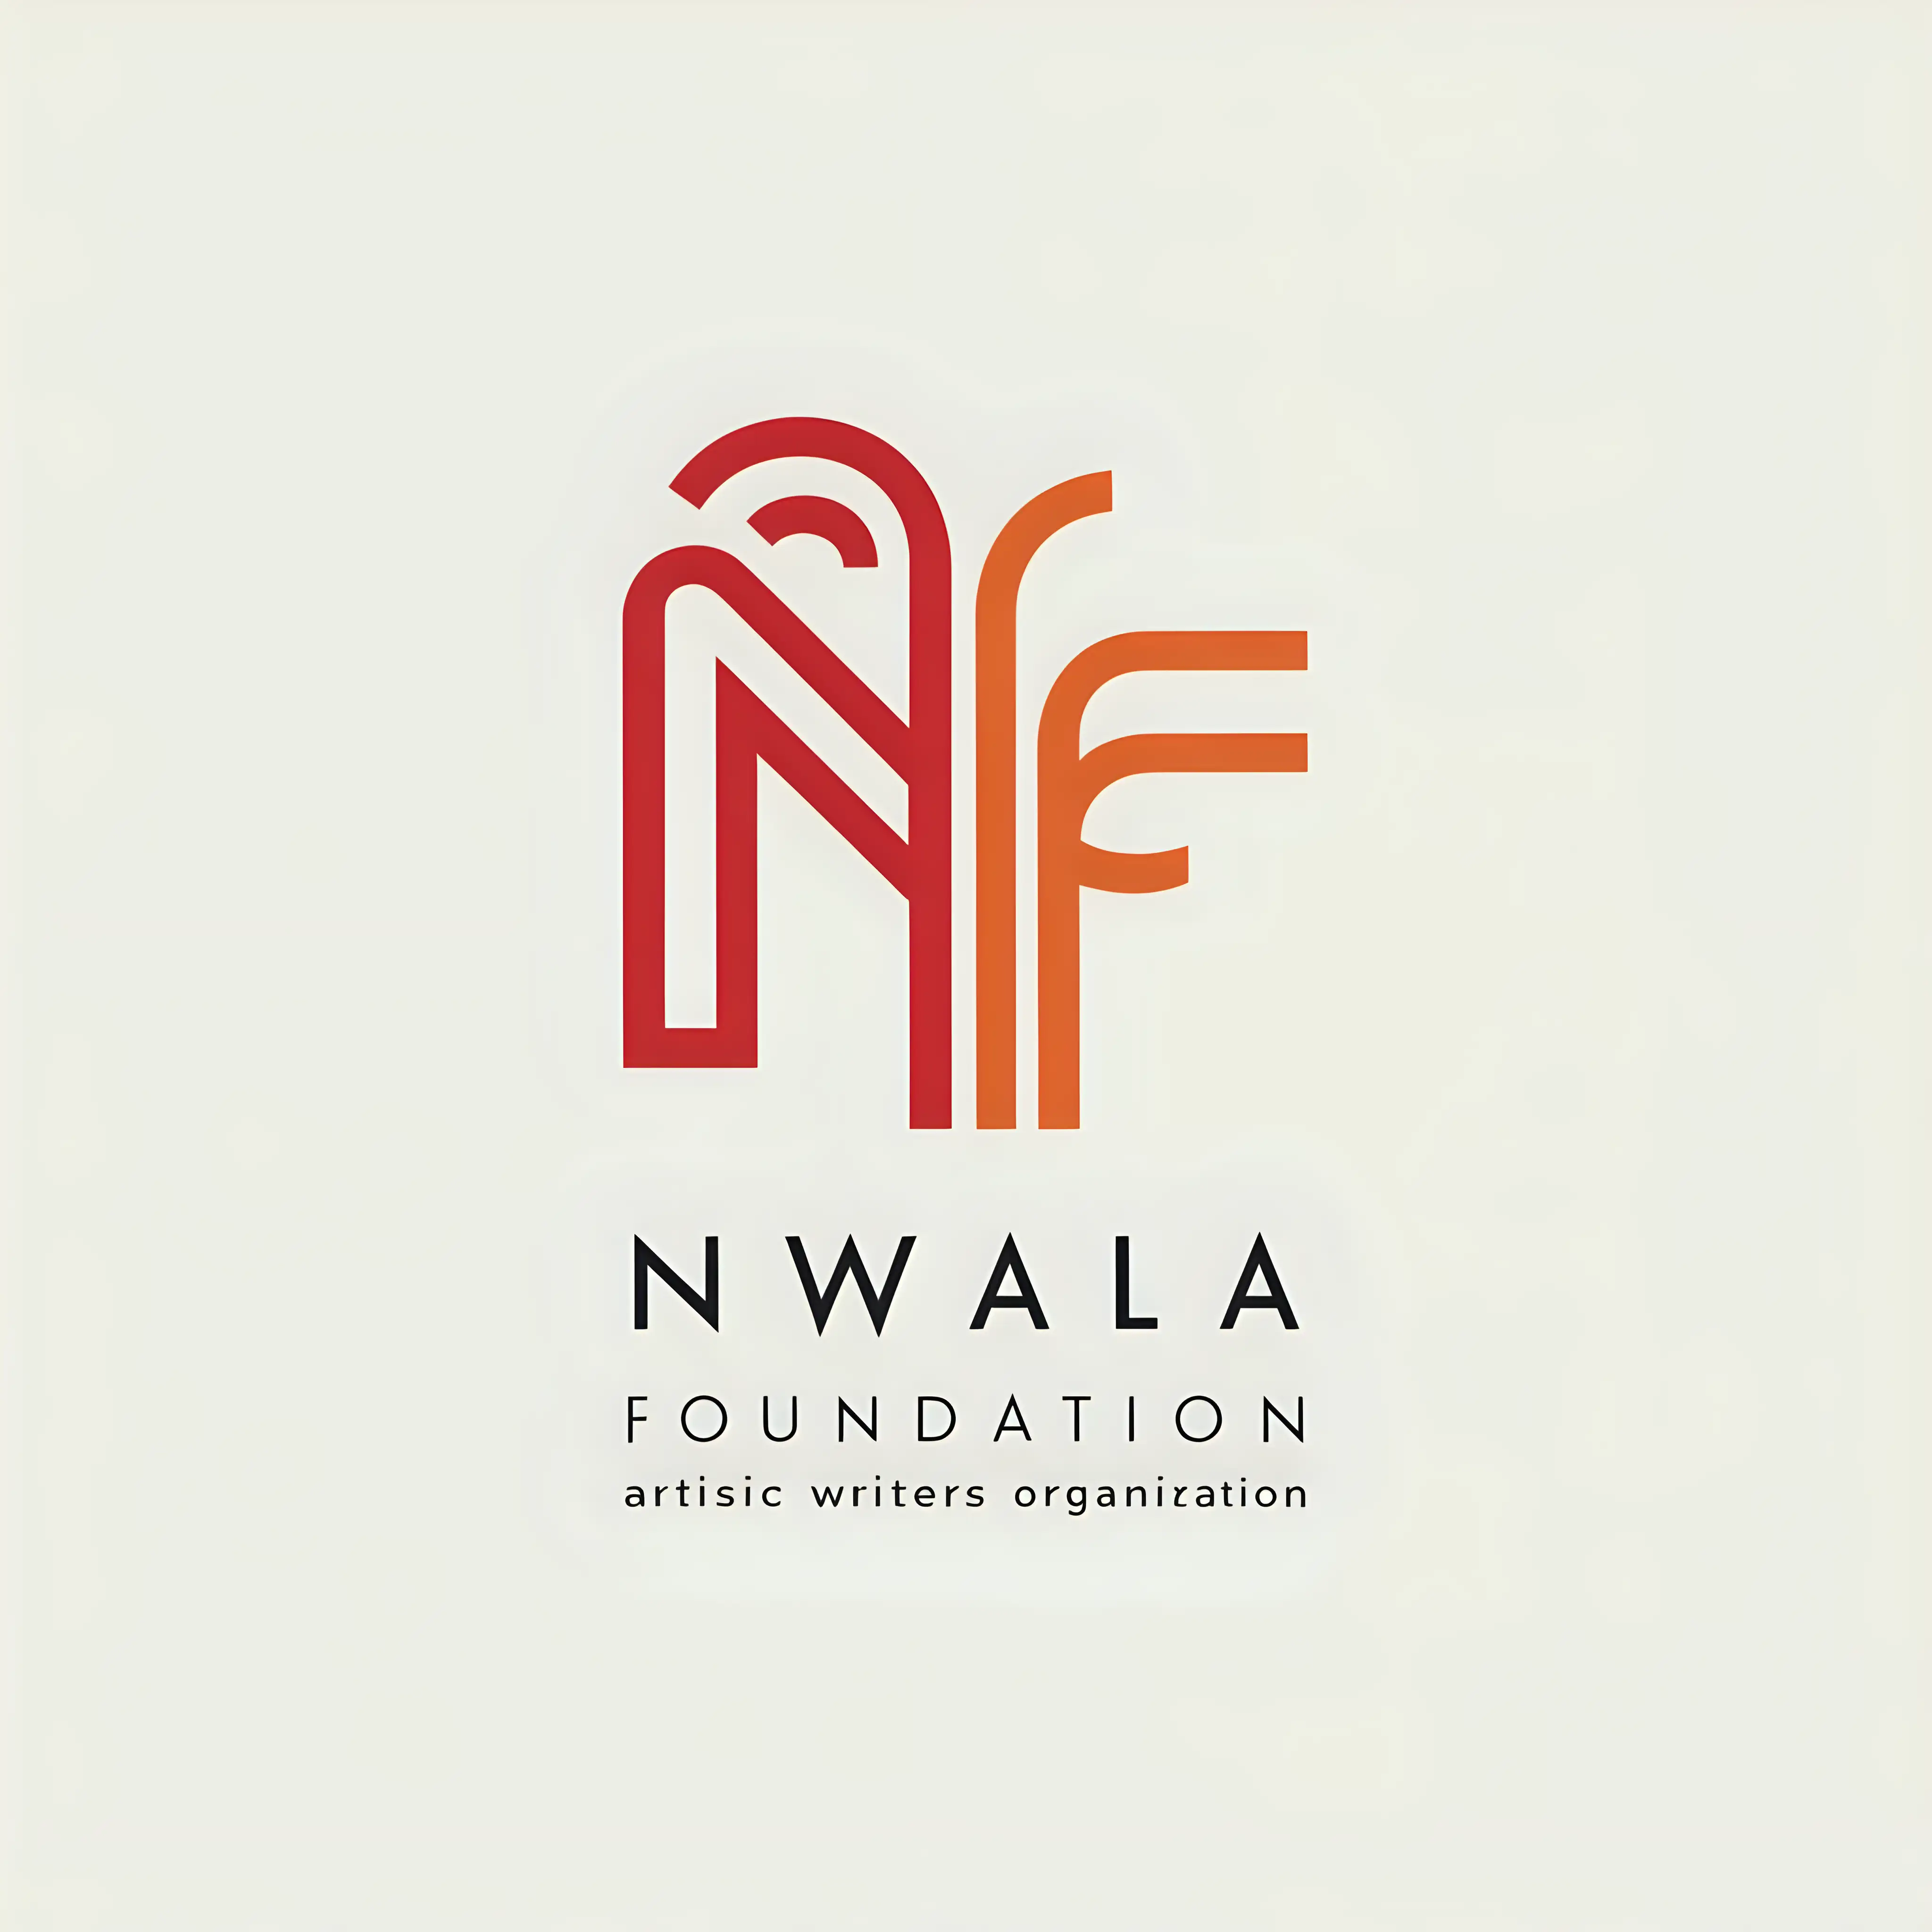 Minimalistic Logo Design for Nwala Foundation Artistic Writers Organization in Red Orange and Grey on White Background